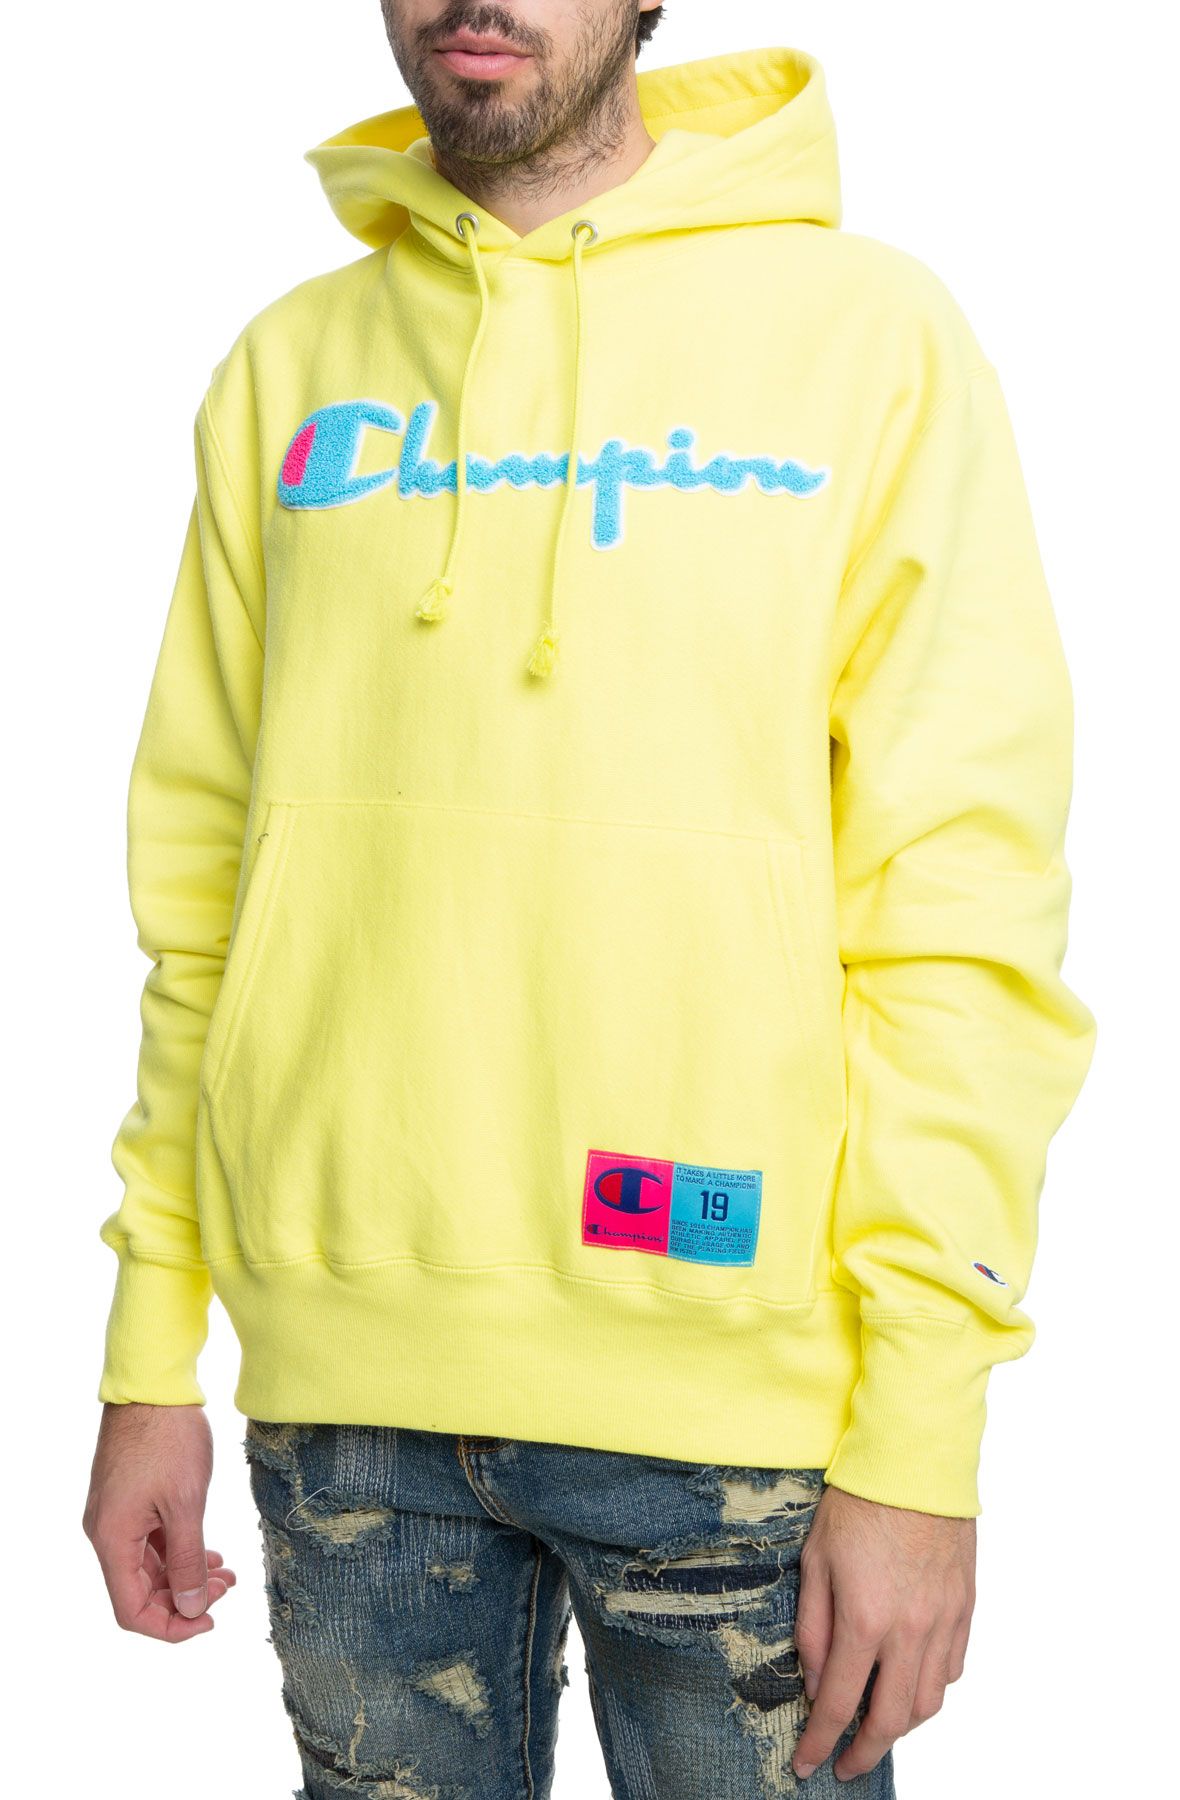 yellow reverse weave champion hoodie